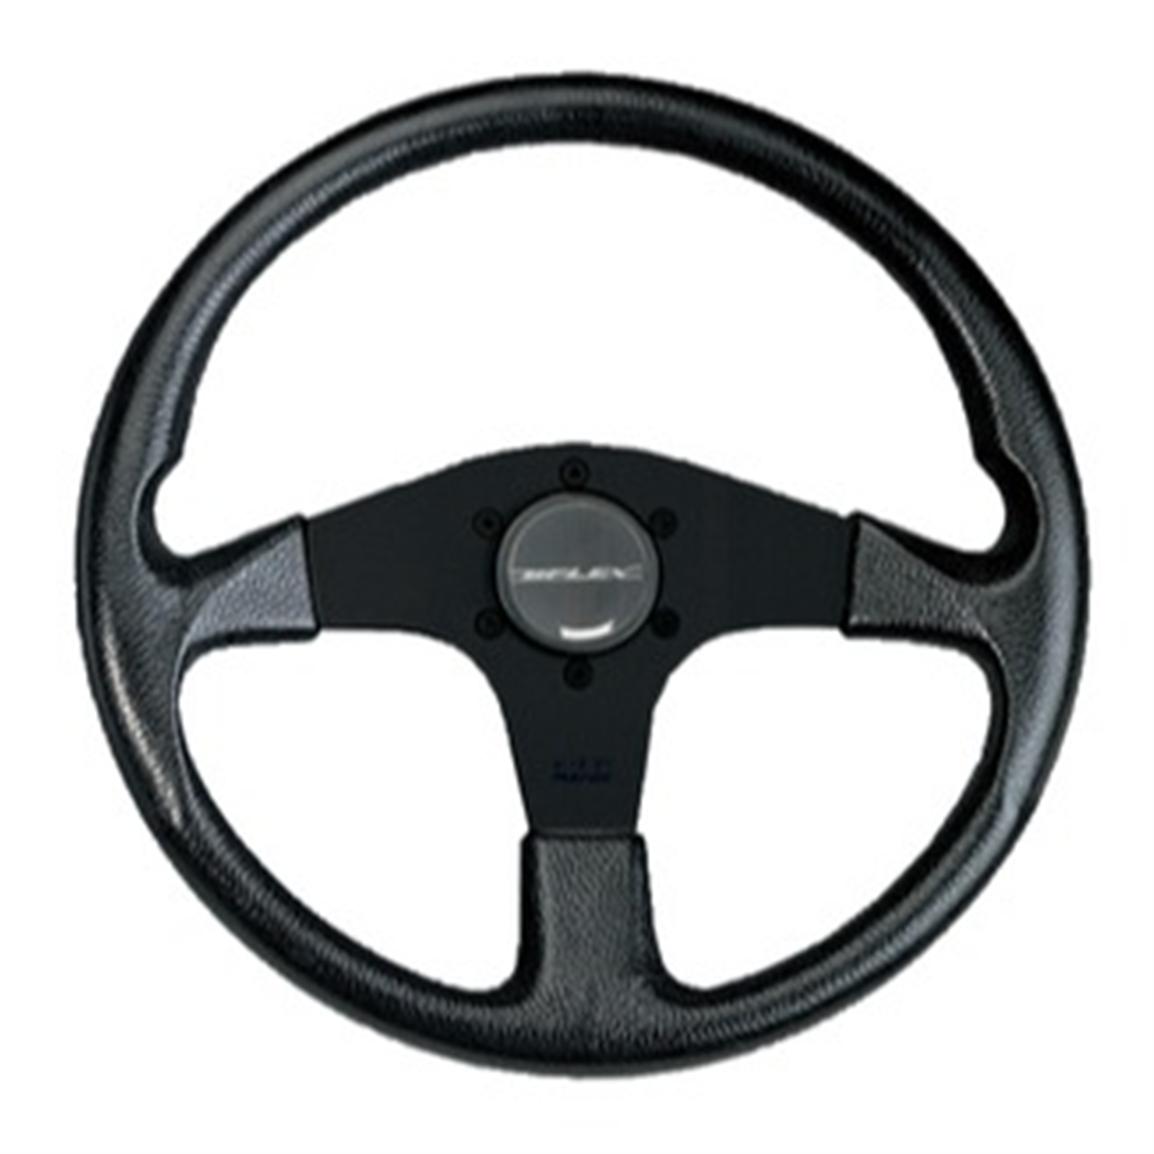 Car Steering Wheel Clipart. r